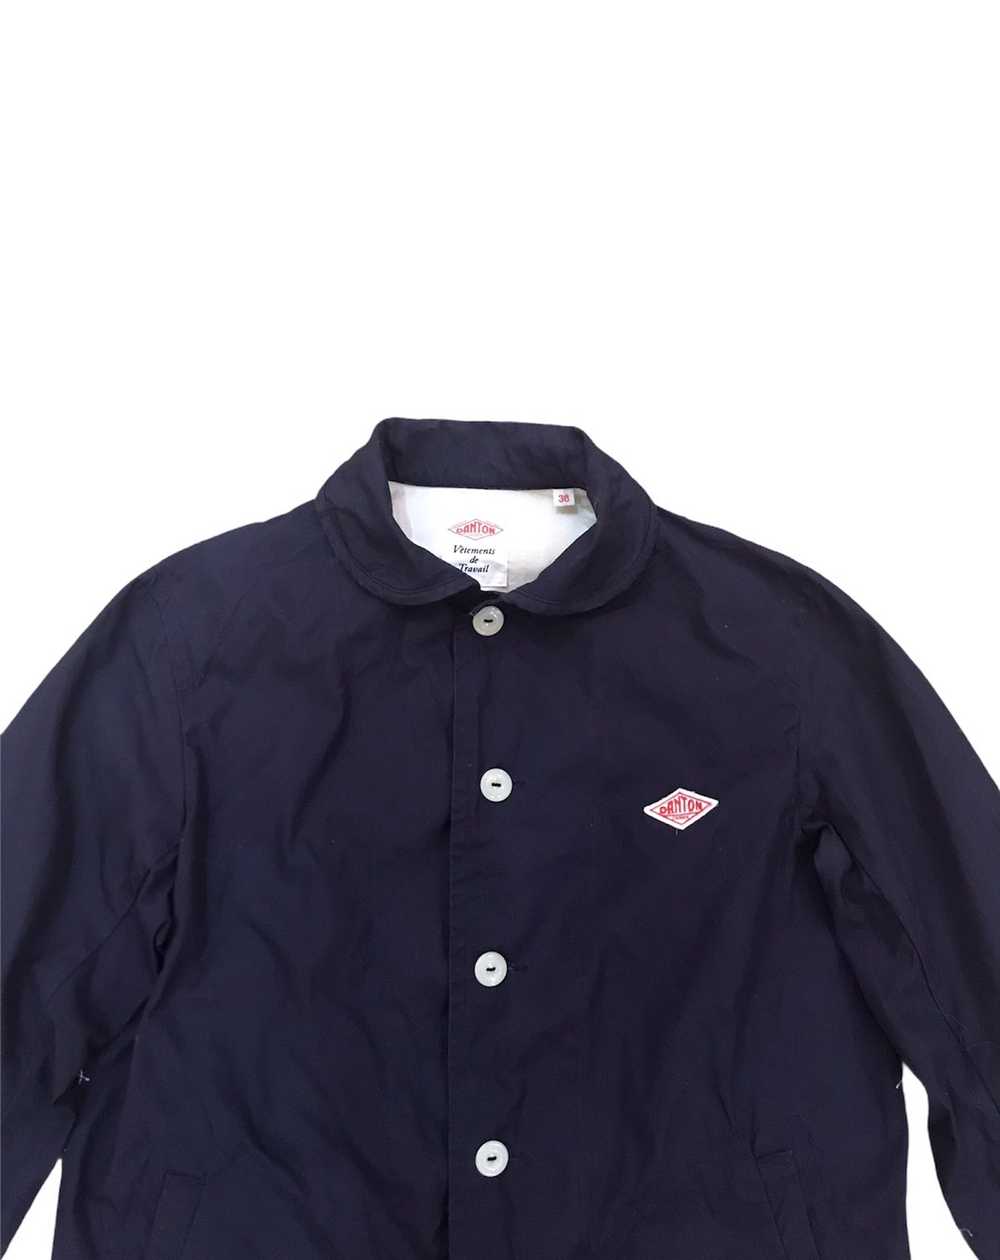 Danton Danton jacket size 36 made in Japan - image 5